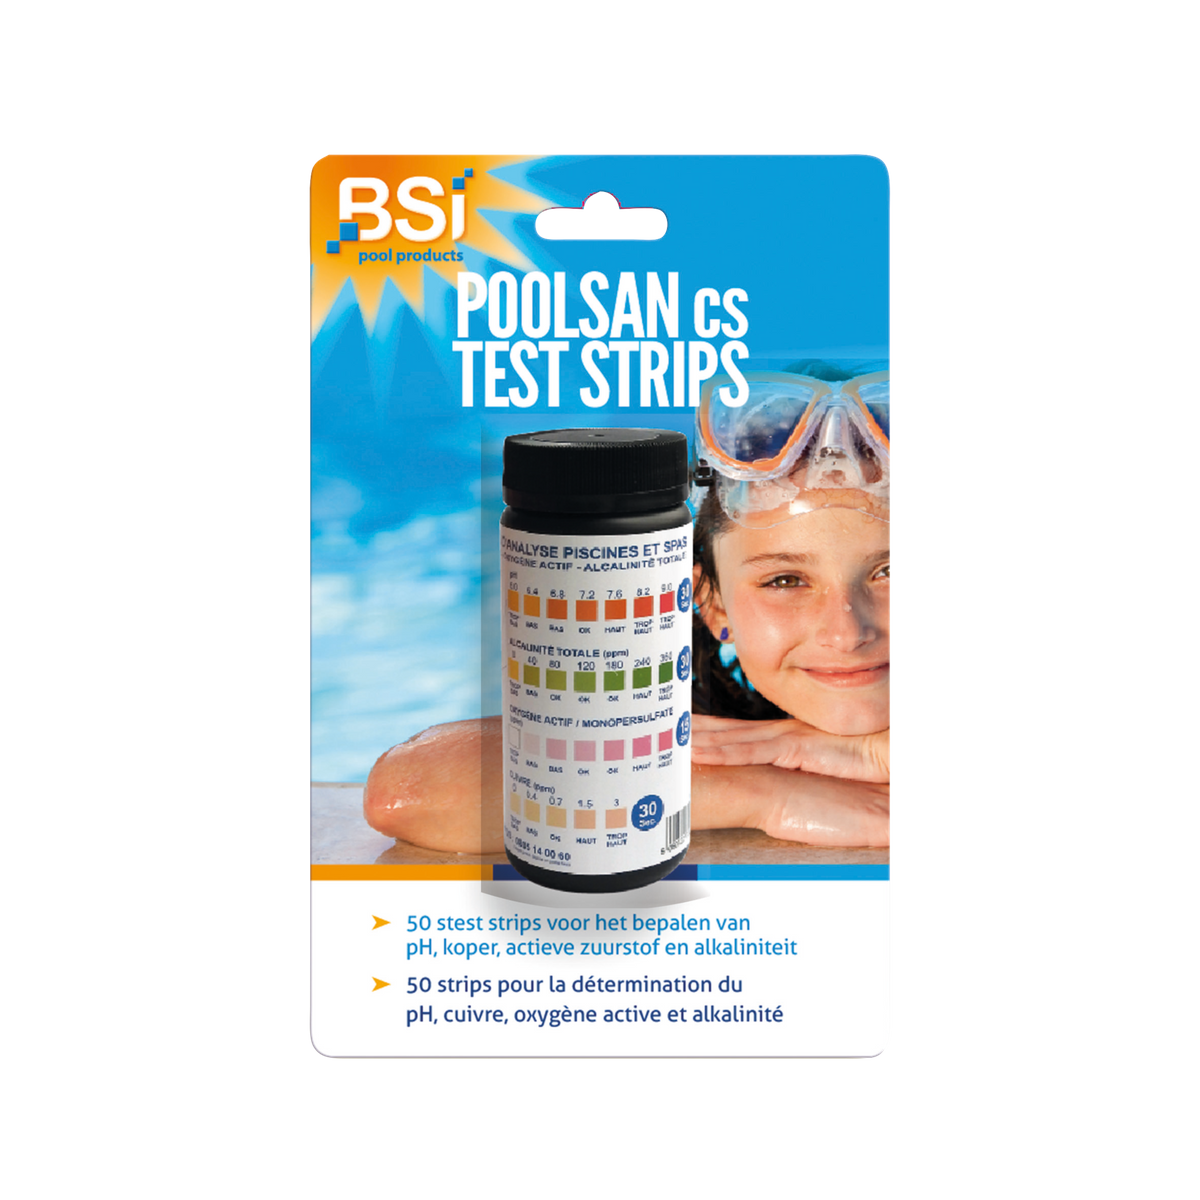 BSI PoolSan CS Test Strips